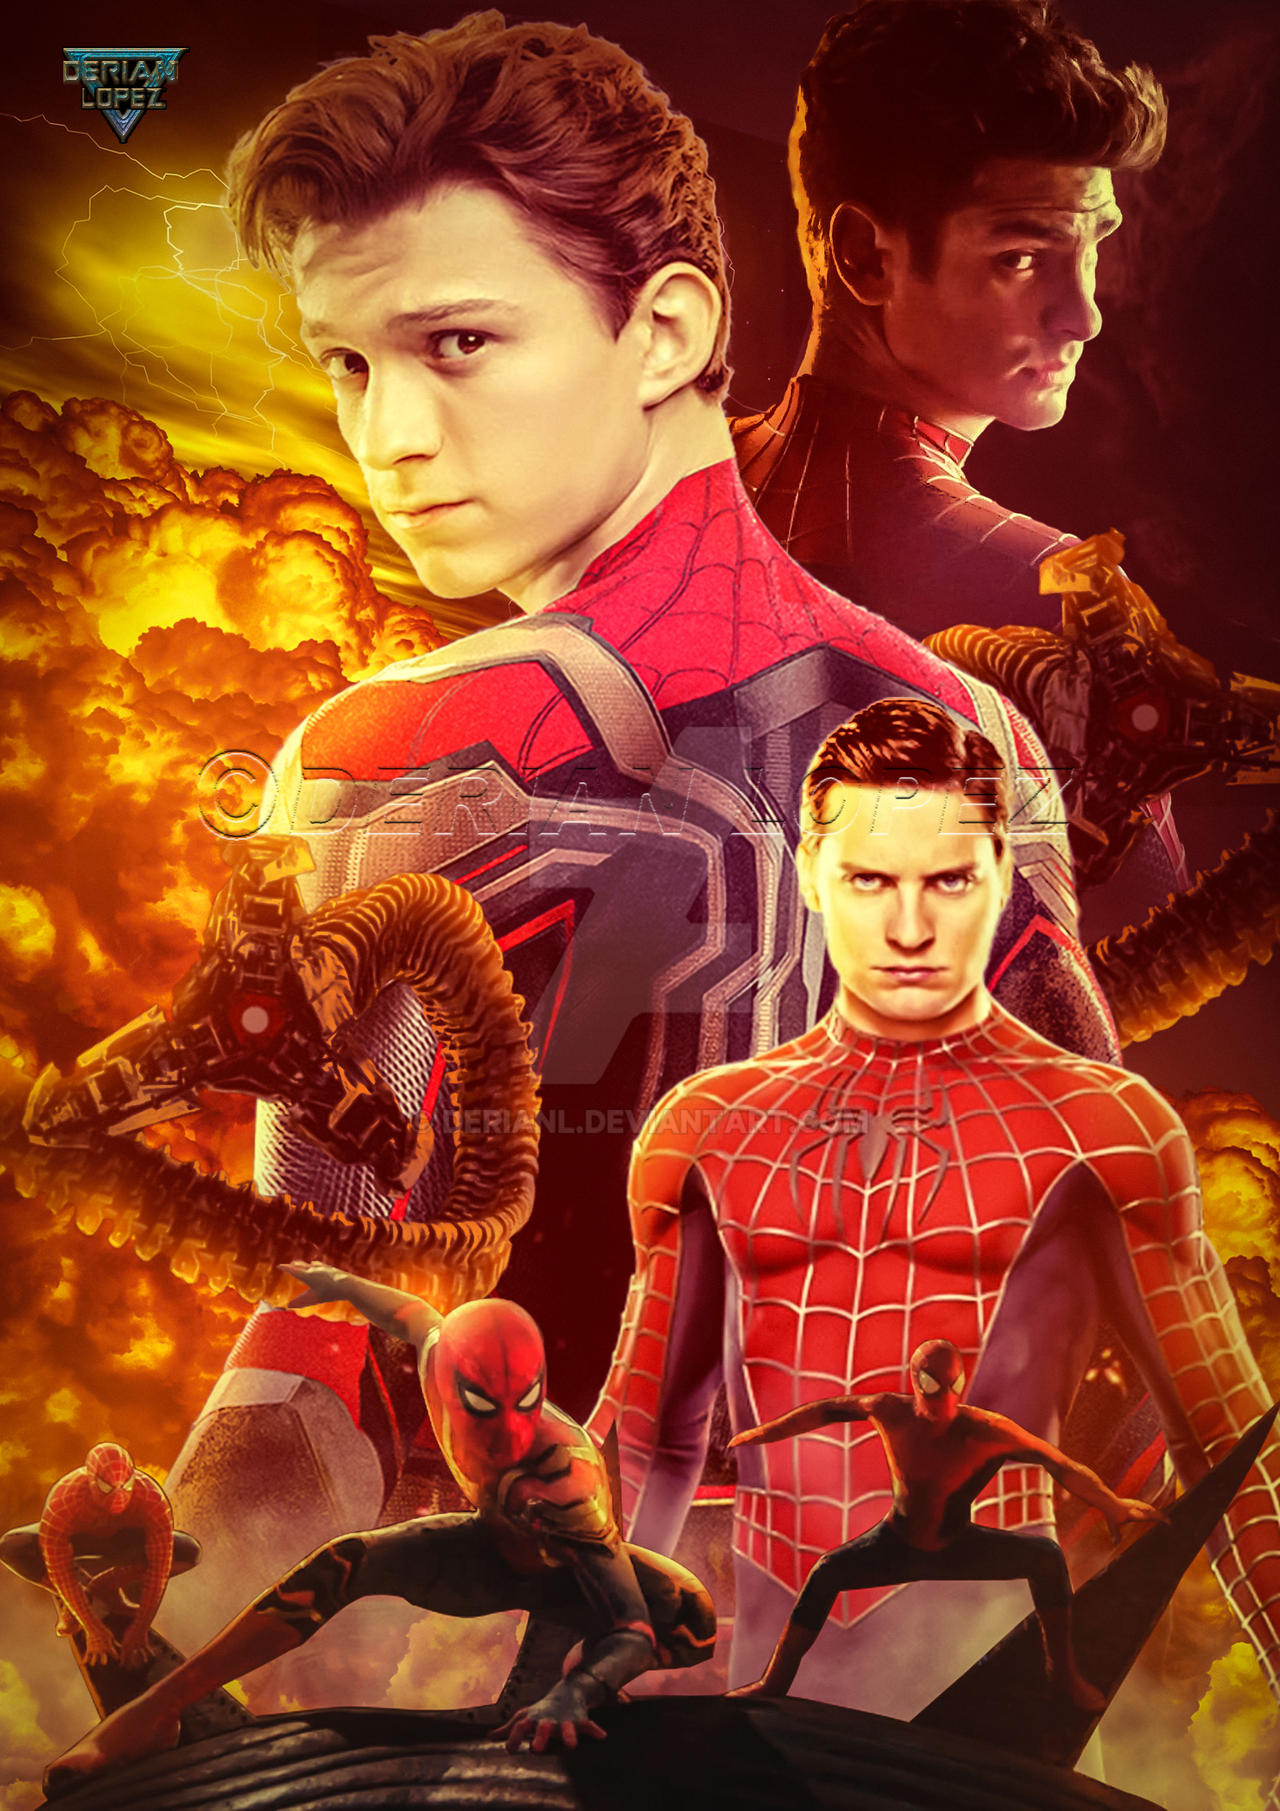 Deadpool 3 Poster by derianl on DeviantArt